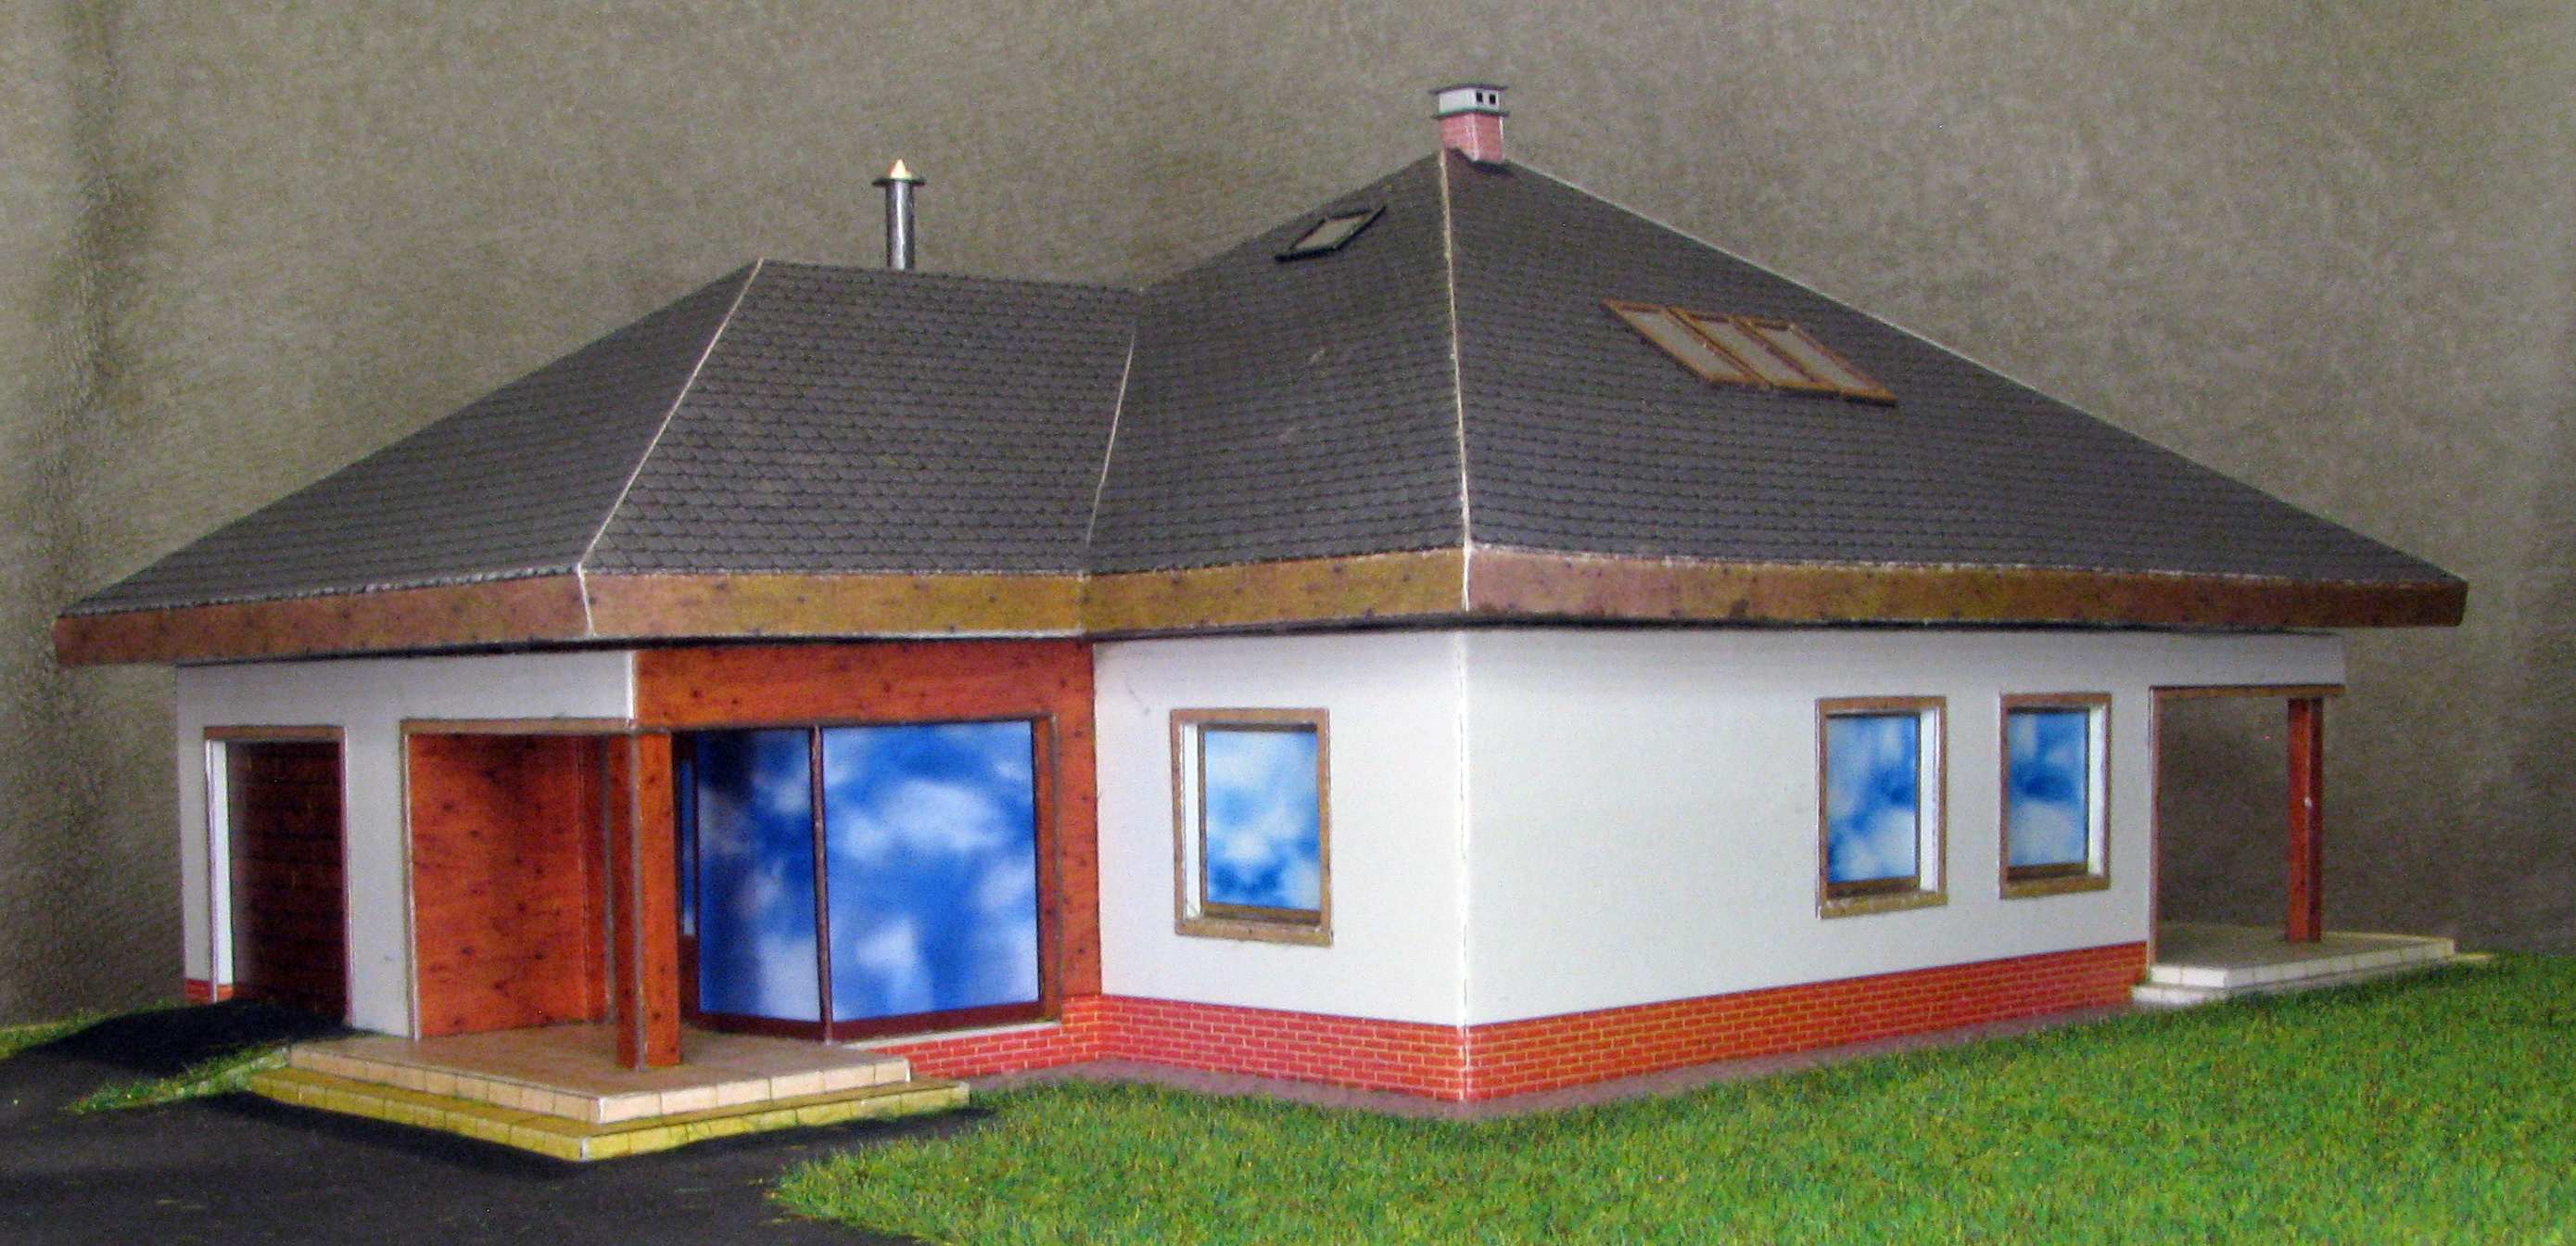 1:87 House by Pawel (Paper model)